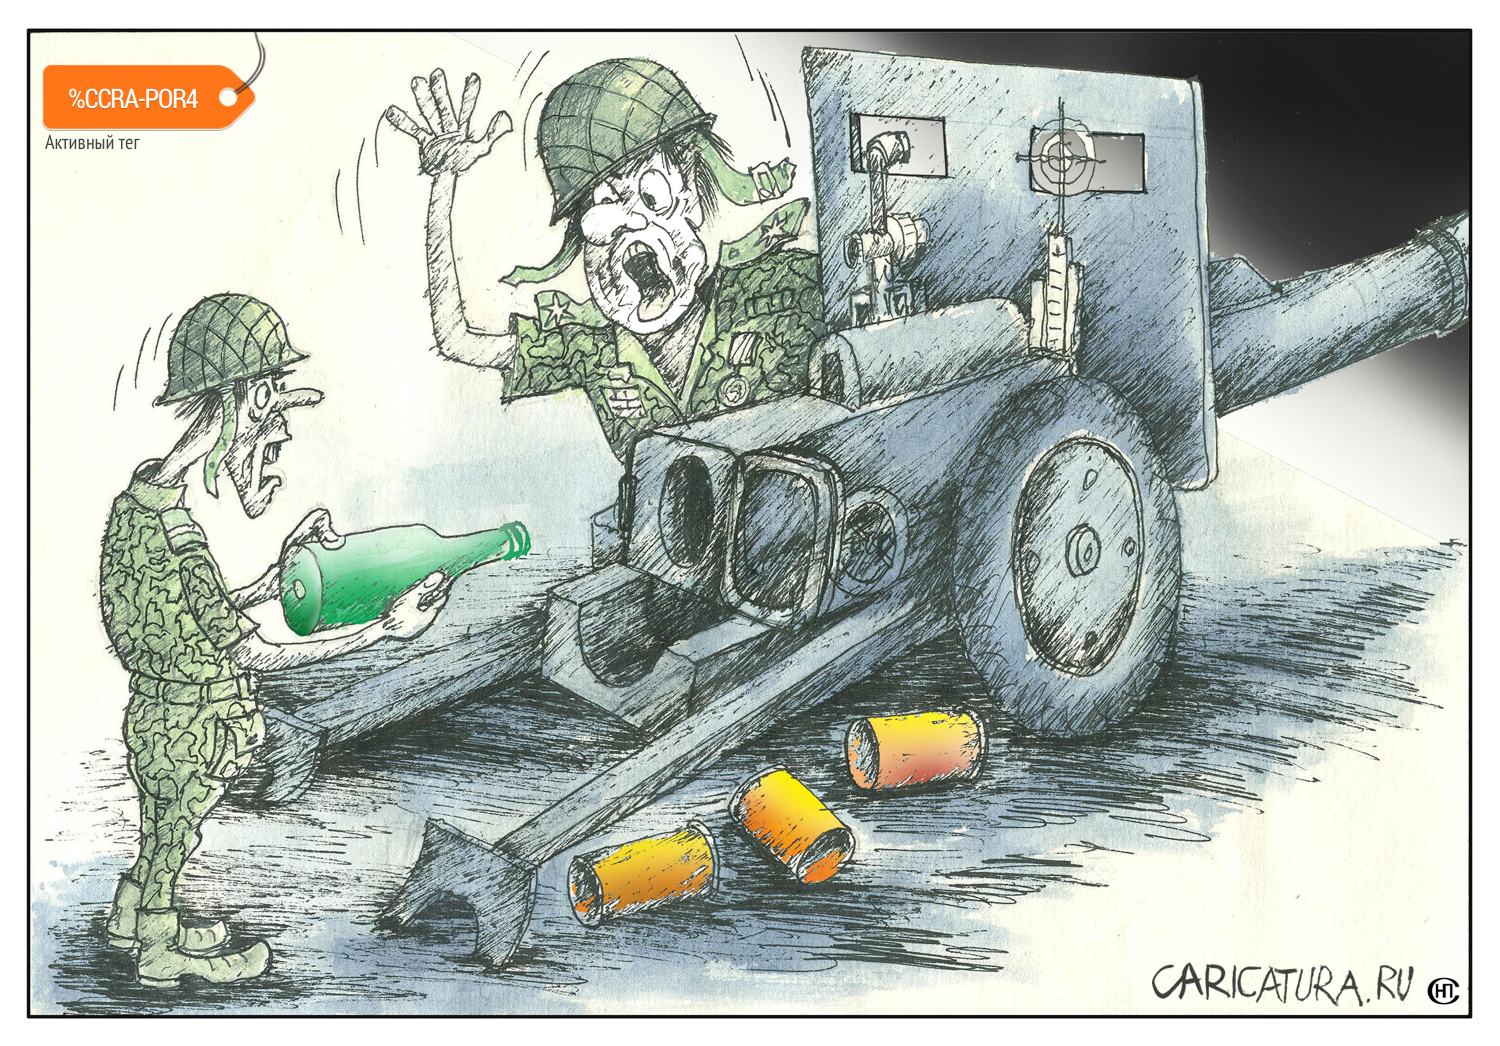 Карикатура "Последний снаряд", Николай Свириденко